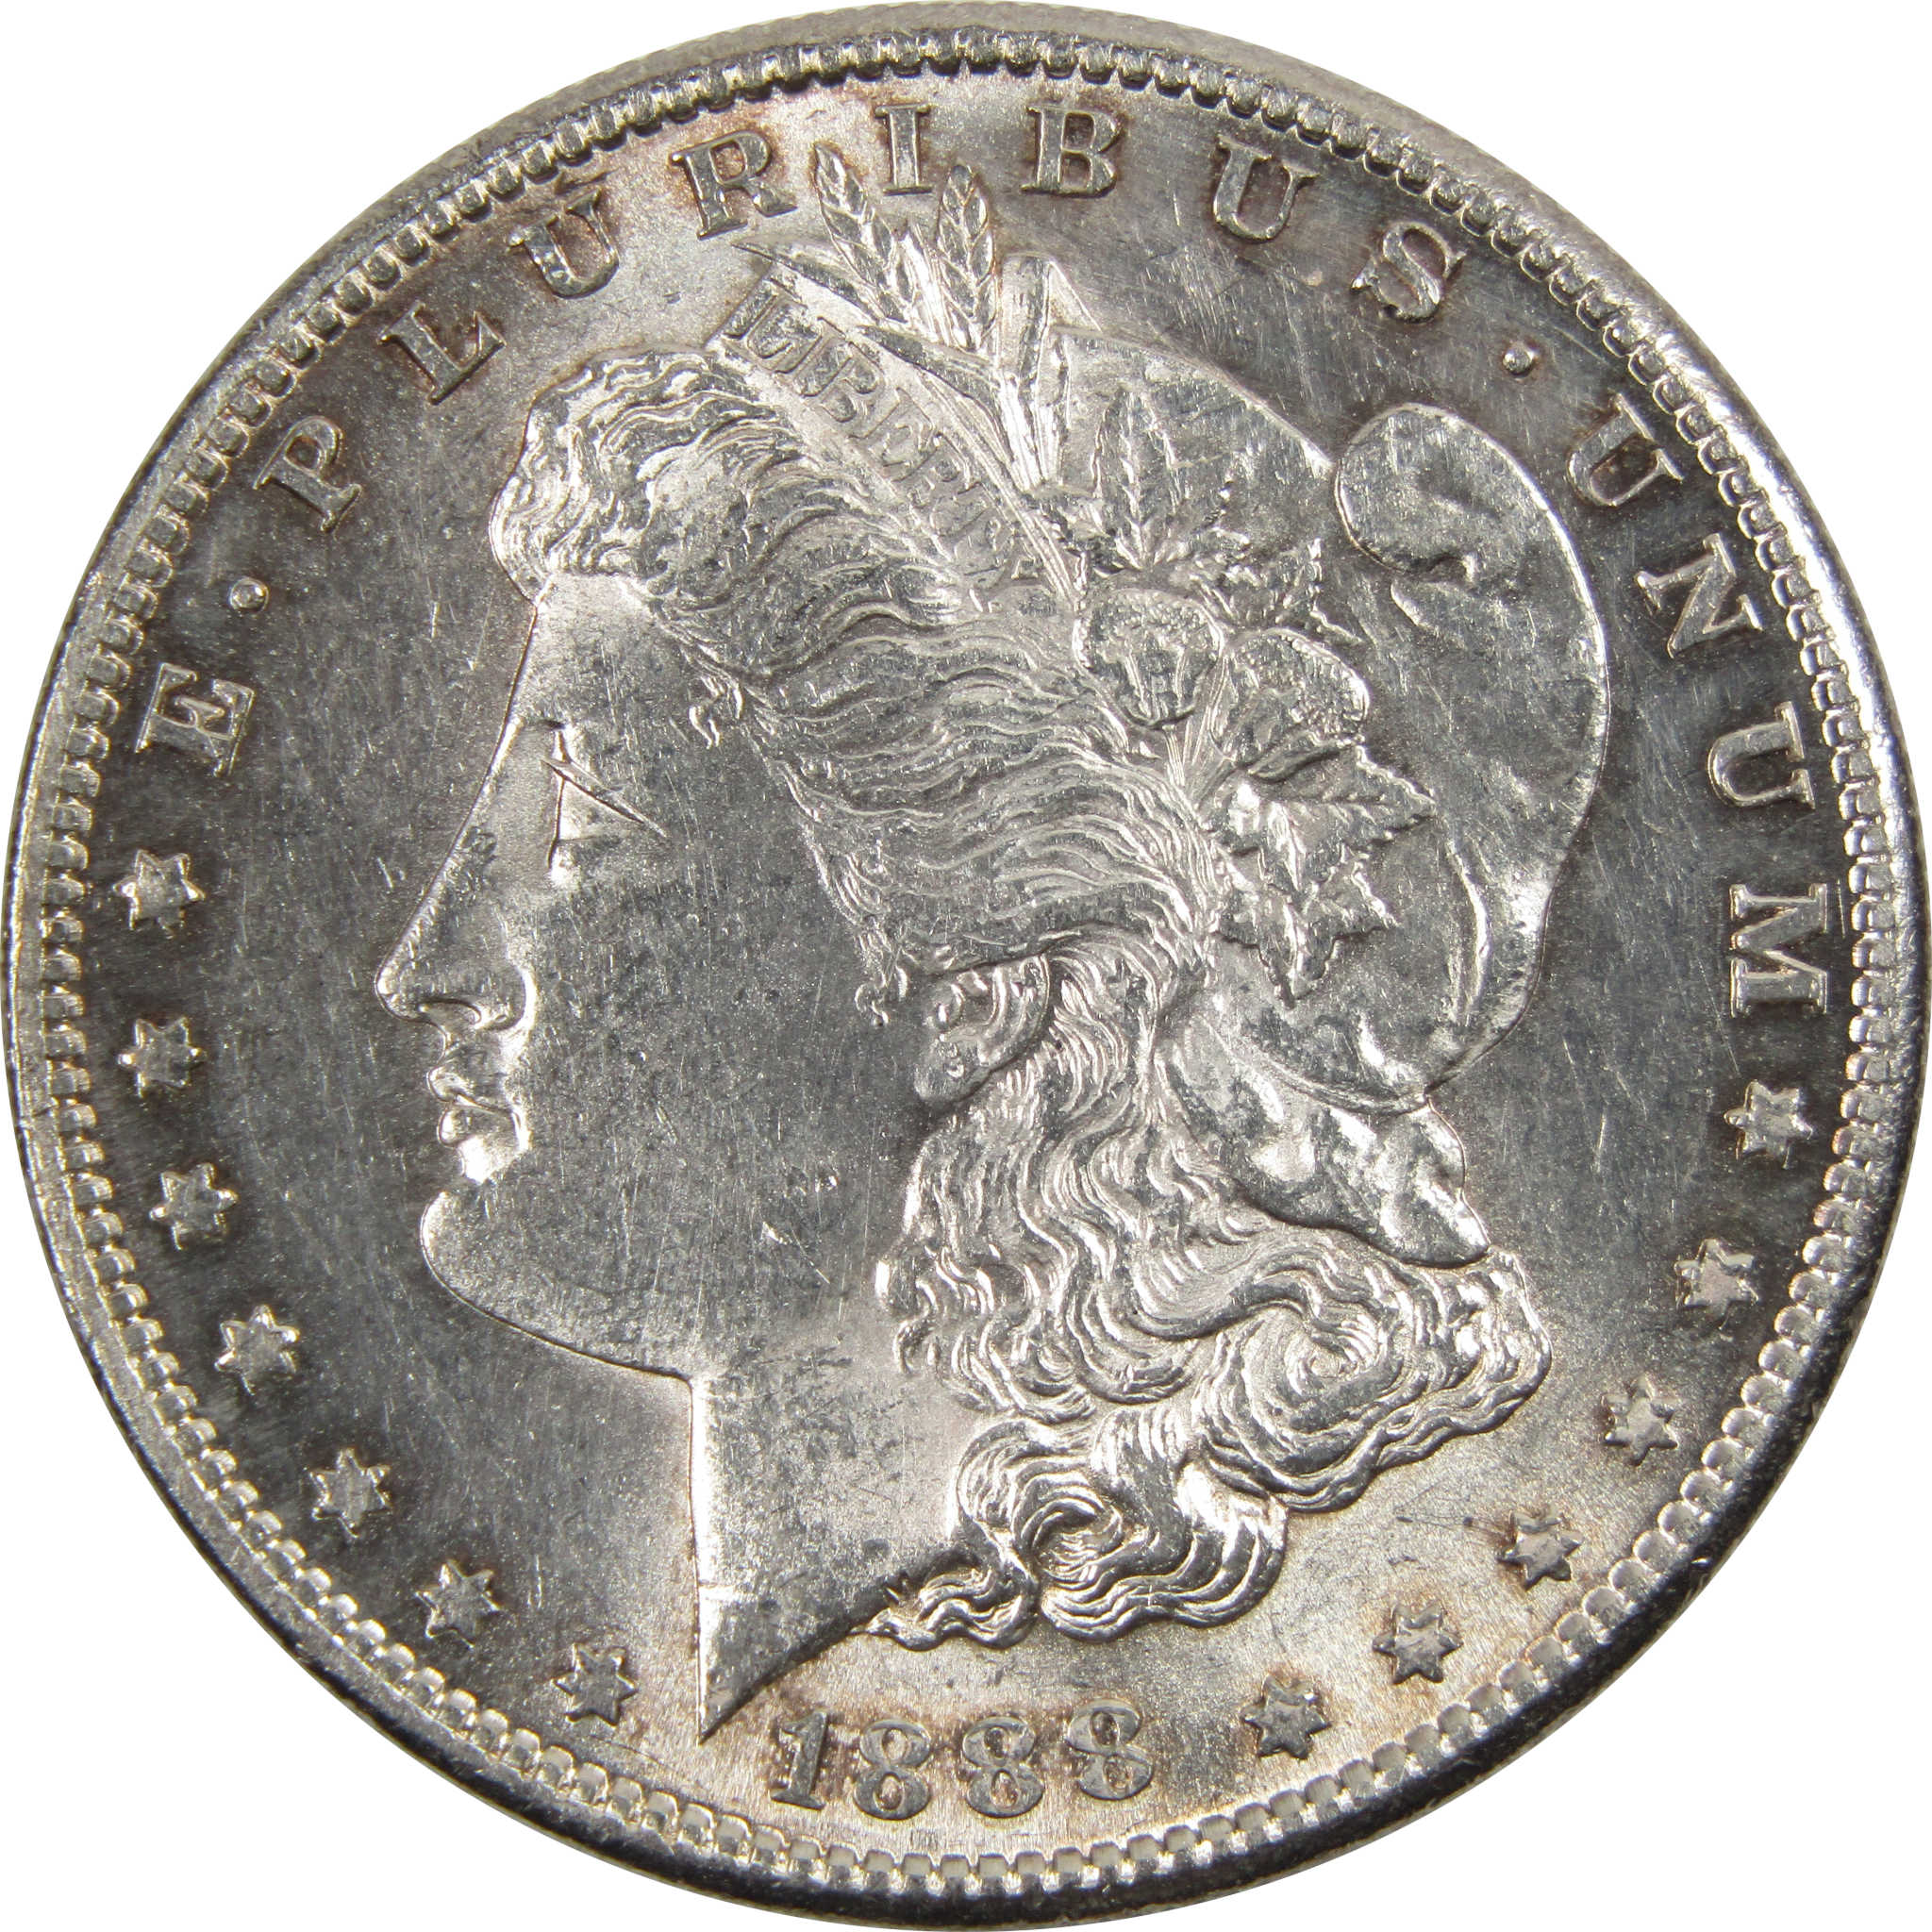 1888 S Morgan Dollar BU Uncirculated 90% Silver $1 Coin SKU:I8175 - Morgan coin - Morgan silver dollar - Morgan silver dollar for sale - Profile Coins &amp; Collectibles